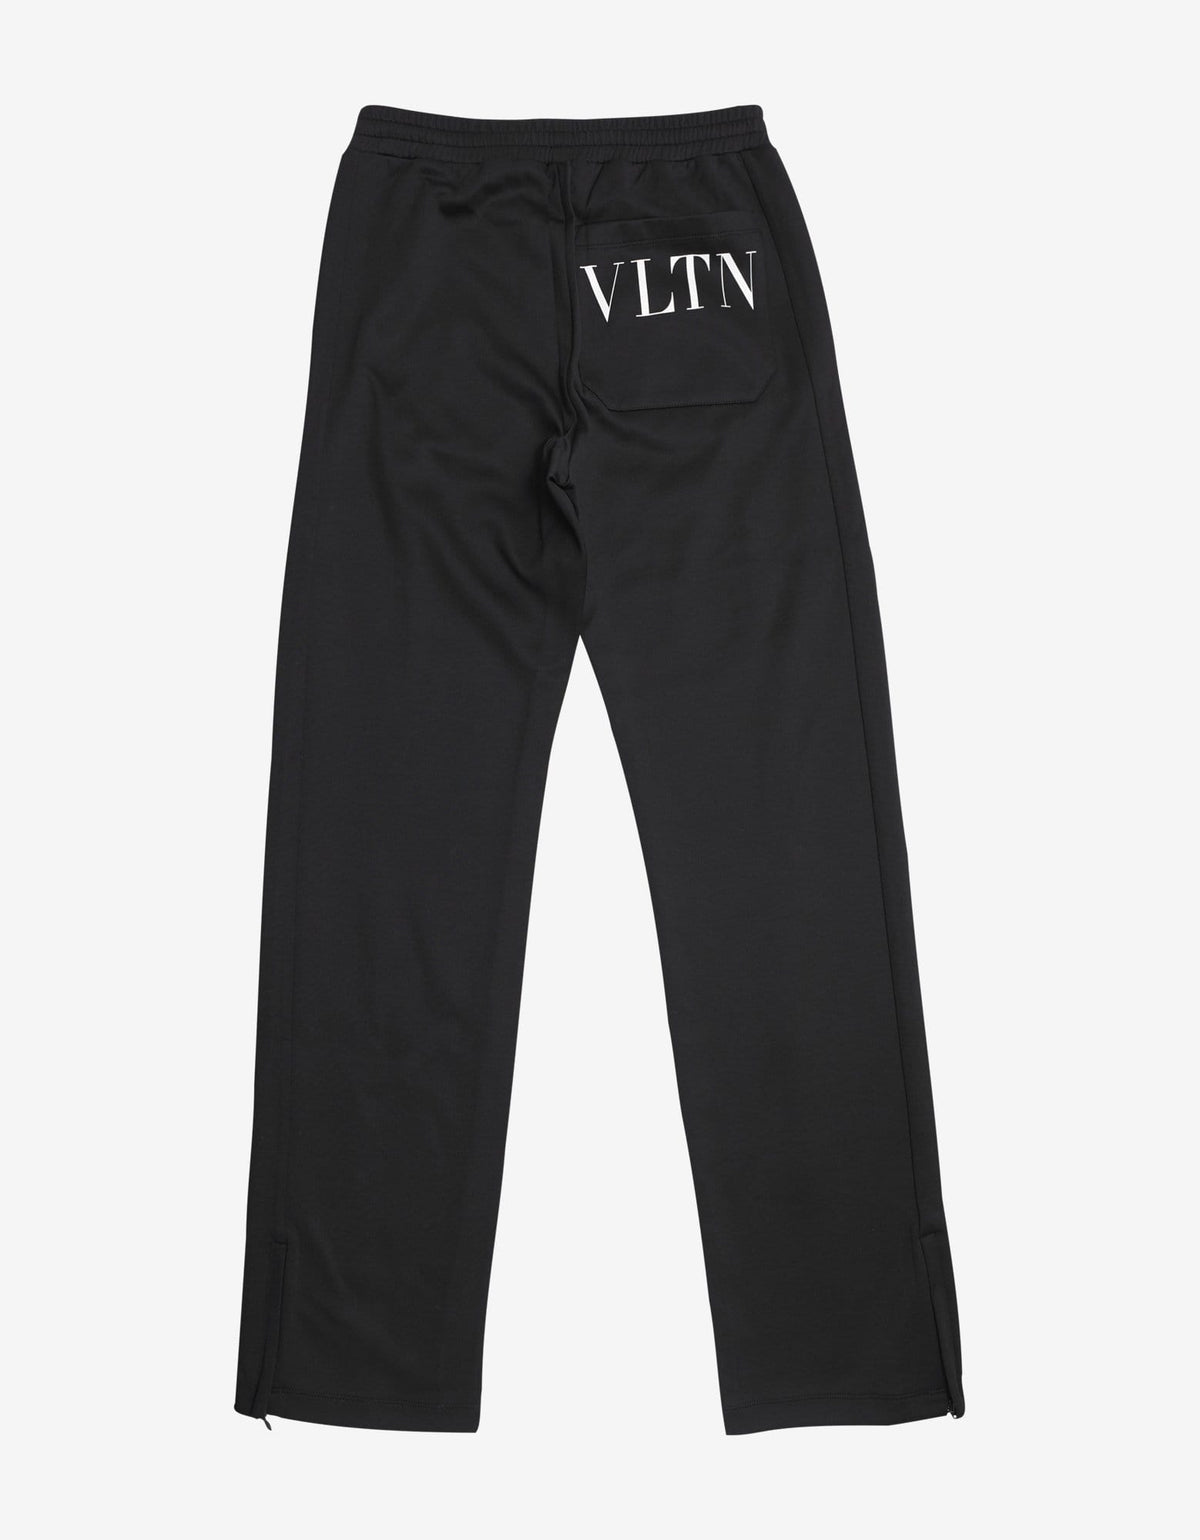 Valentino Black Nylon Blend VLTN Sweat Pants